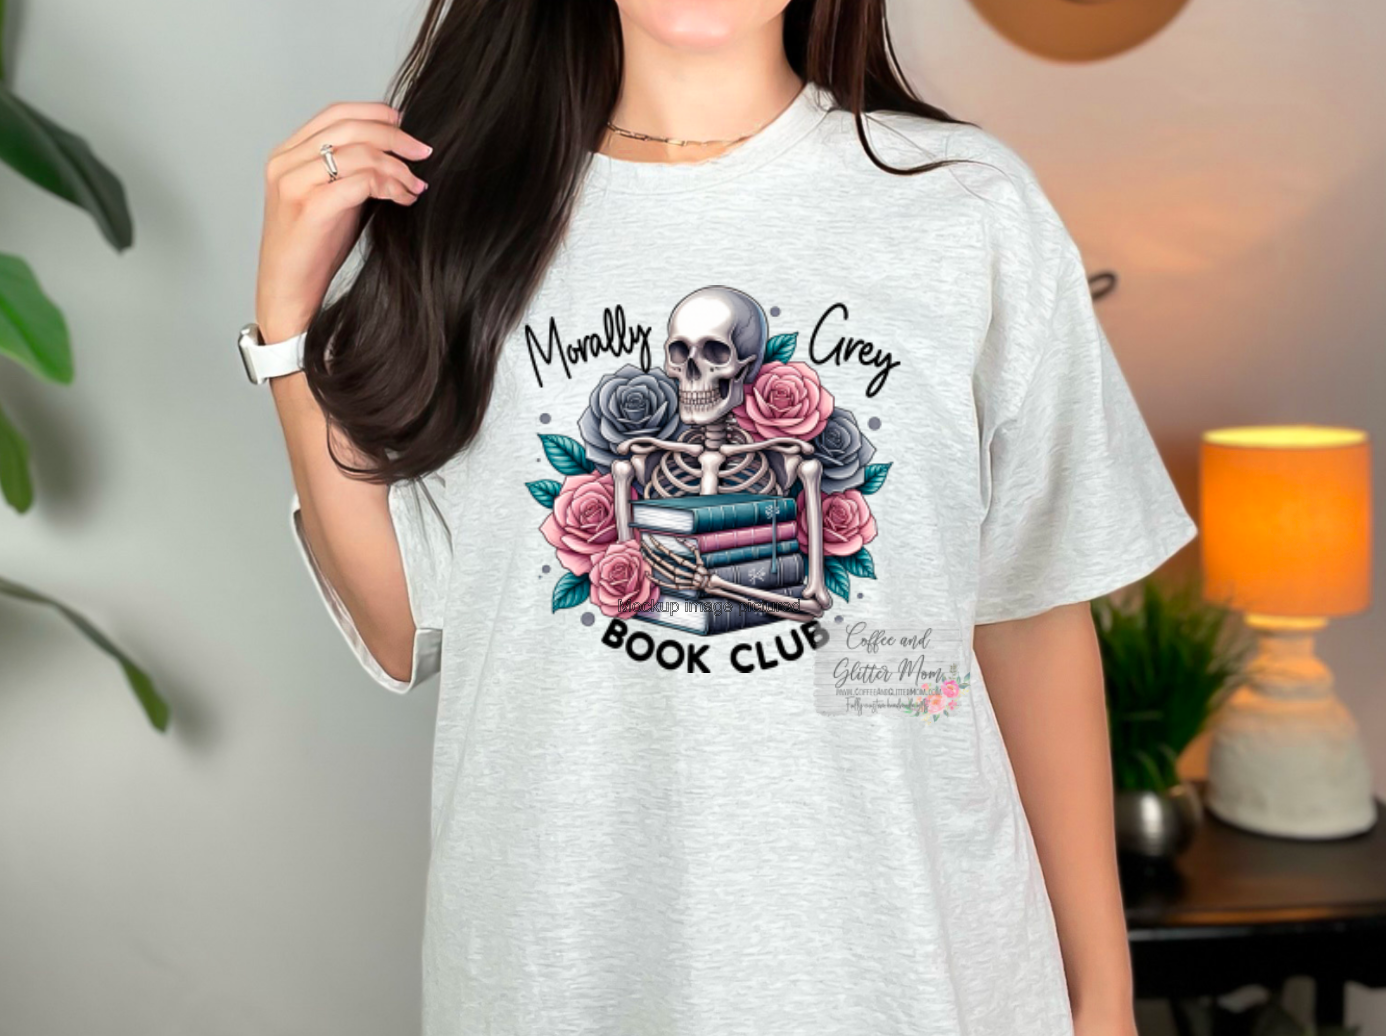 Morally Grey Book Club Unisex Tee or Sweatshirt